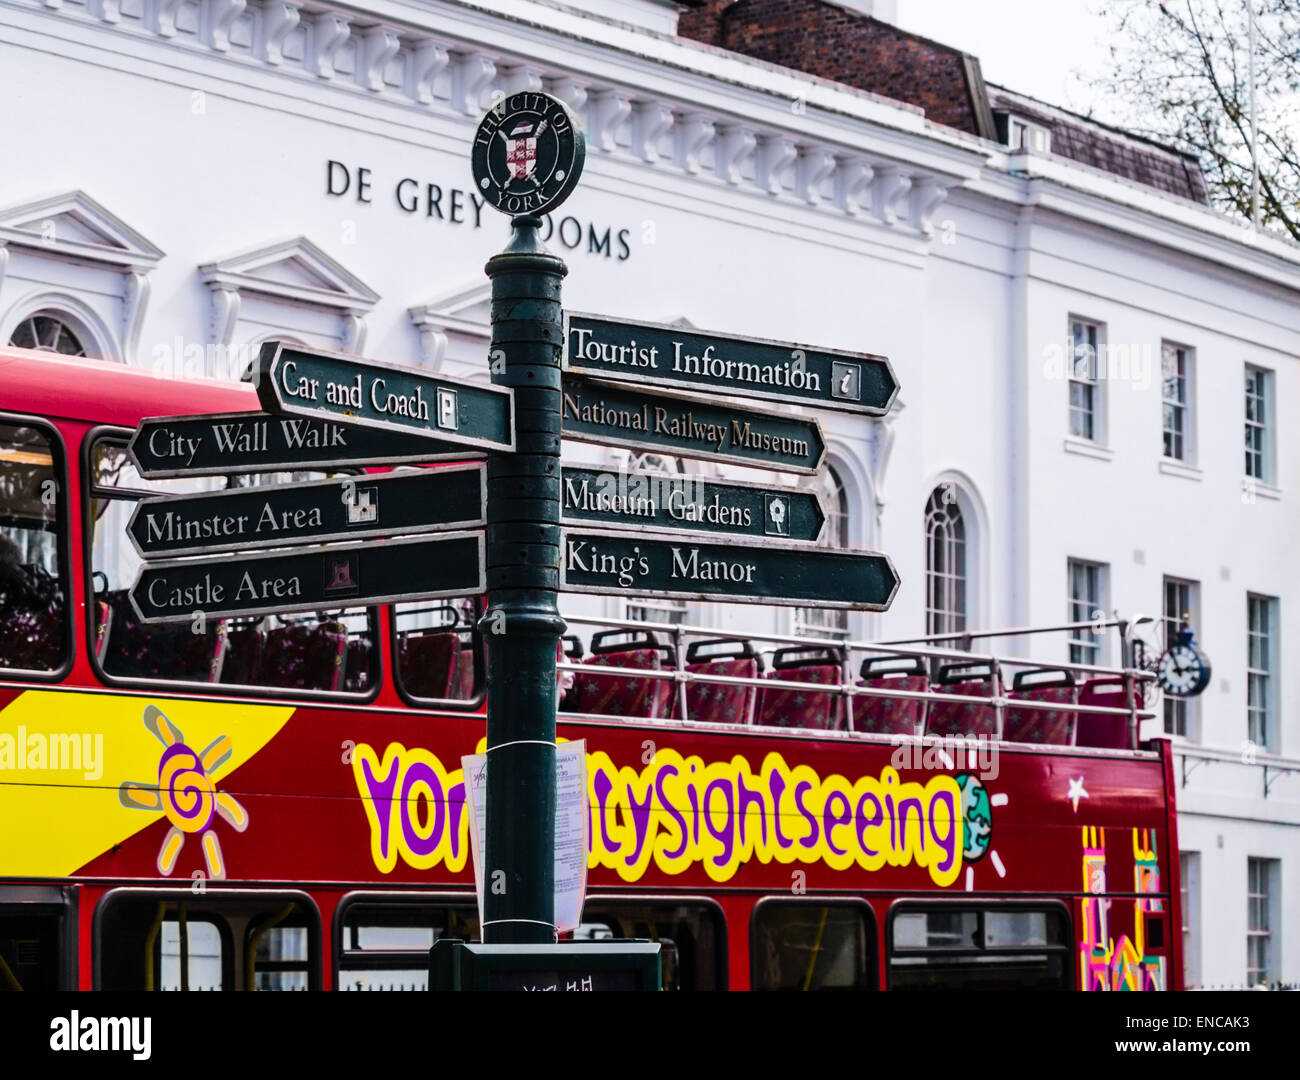 Tourist attractions signpost opposite the De Grey Rooms, St Leonard's Place, York, England, UK Stock Photo